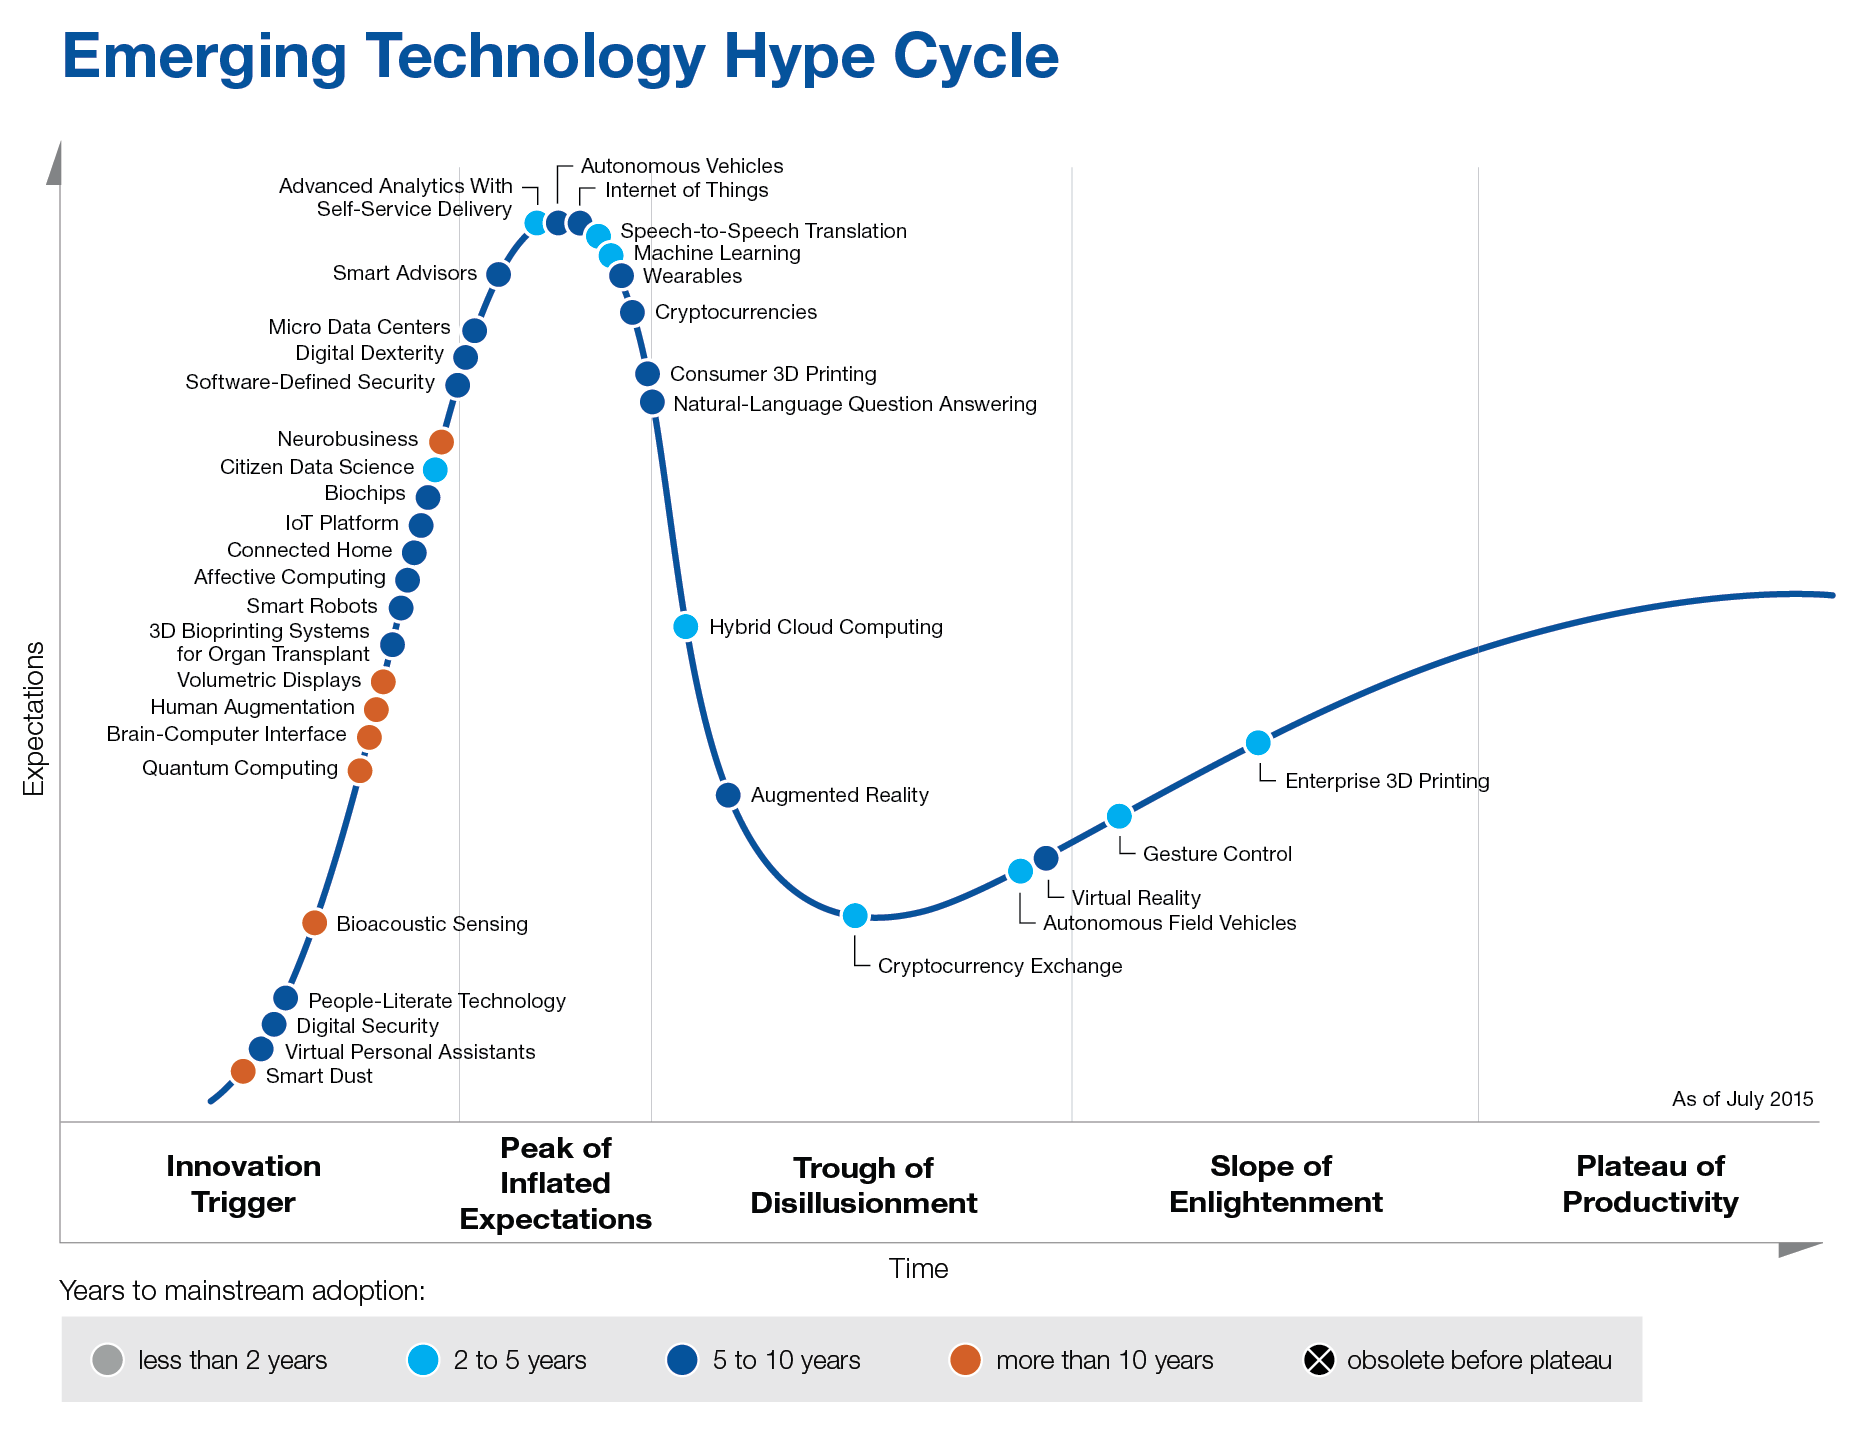 Tech hype cycle